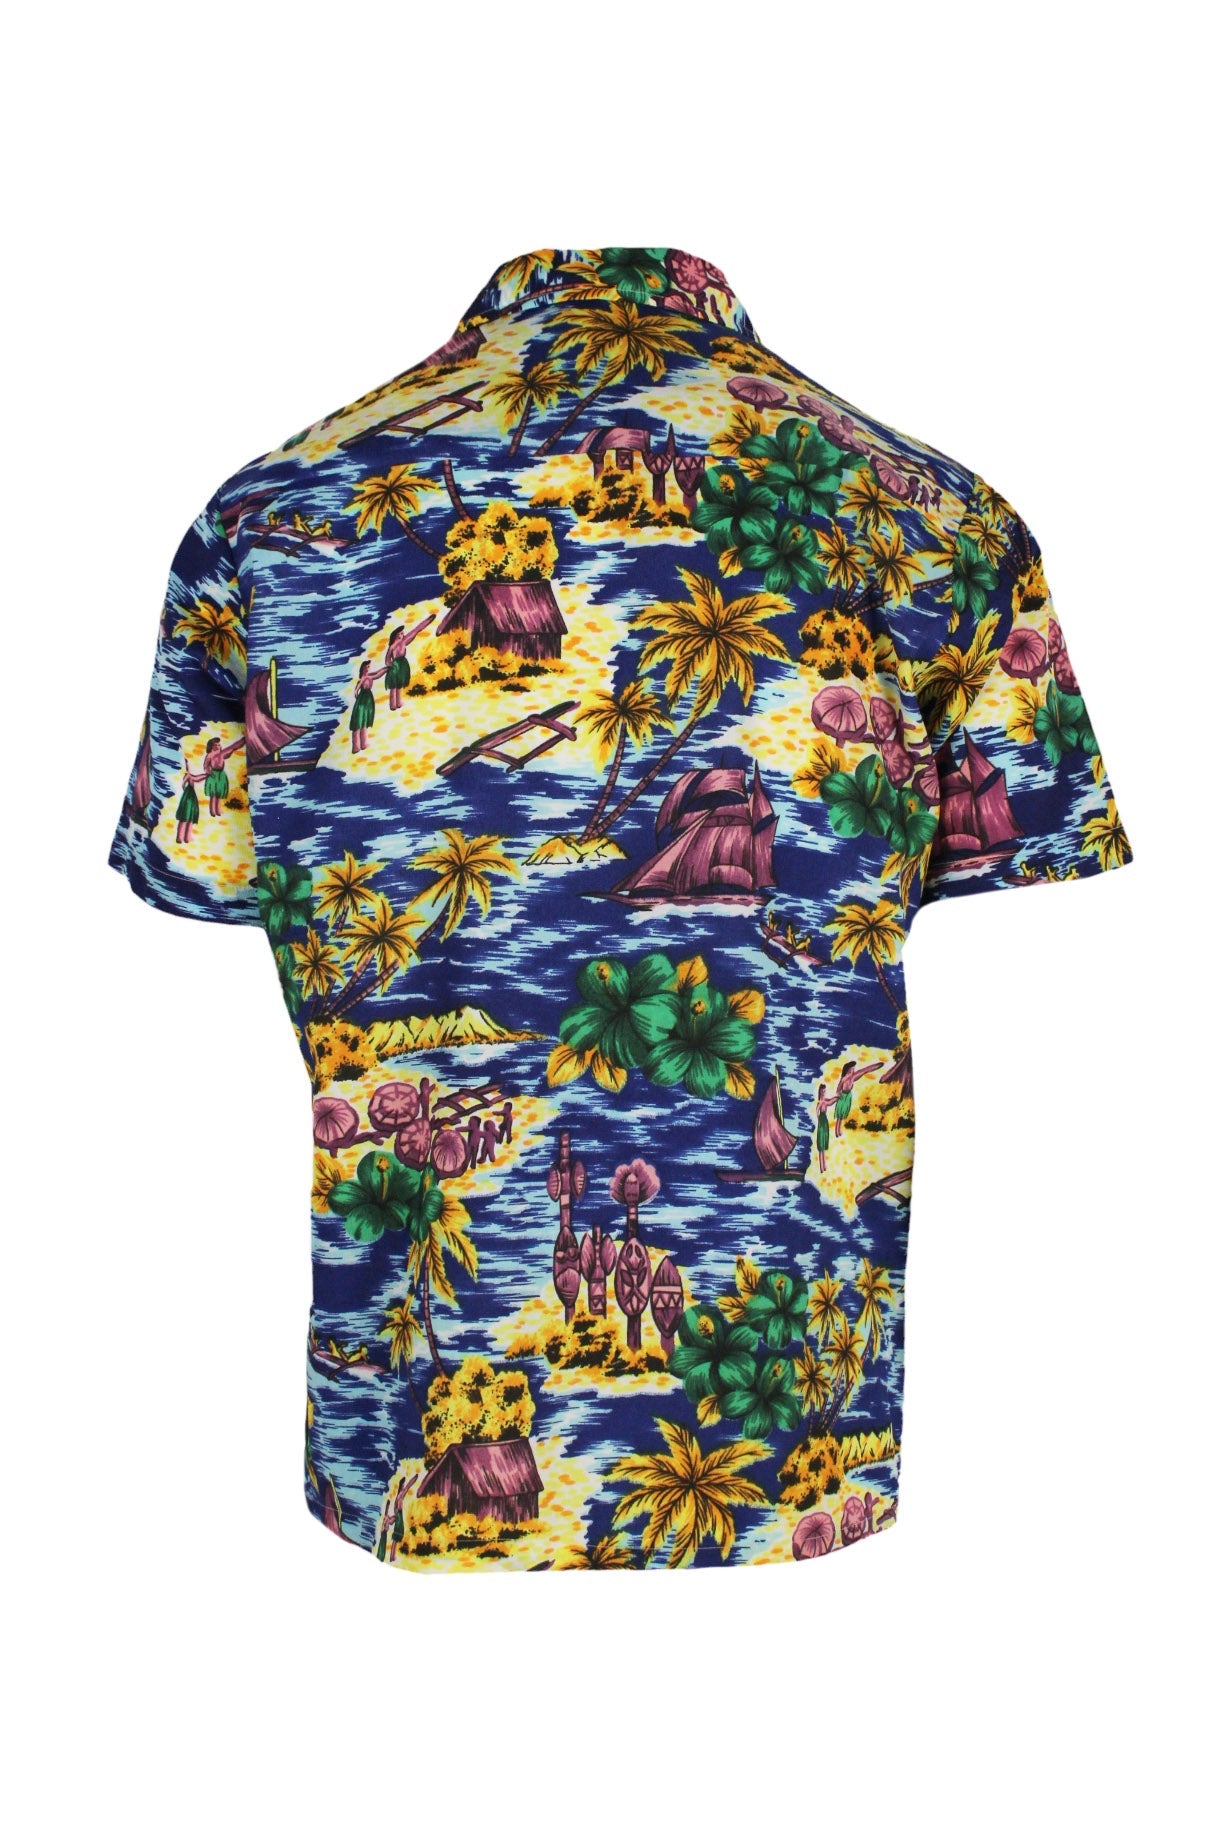 back angle vintage short sleeve hawaiian shirt on masculine mannequin torso.